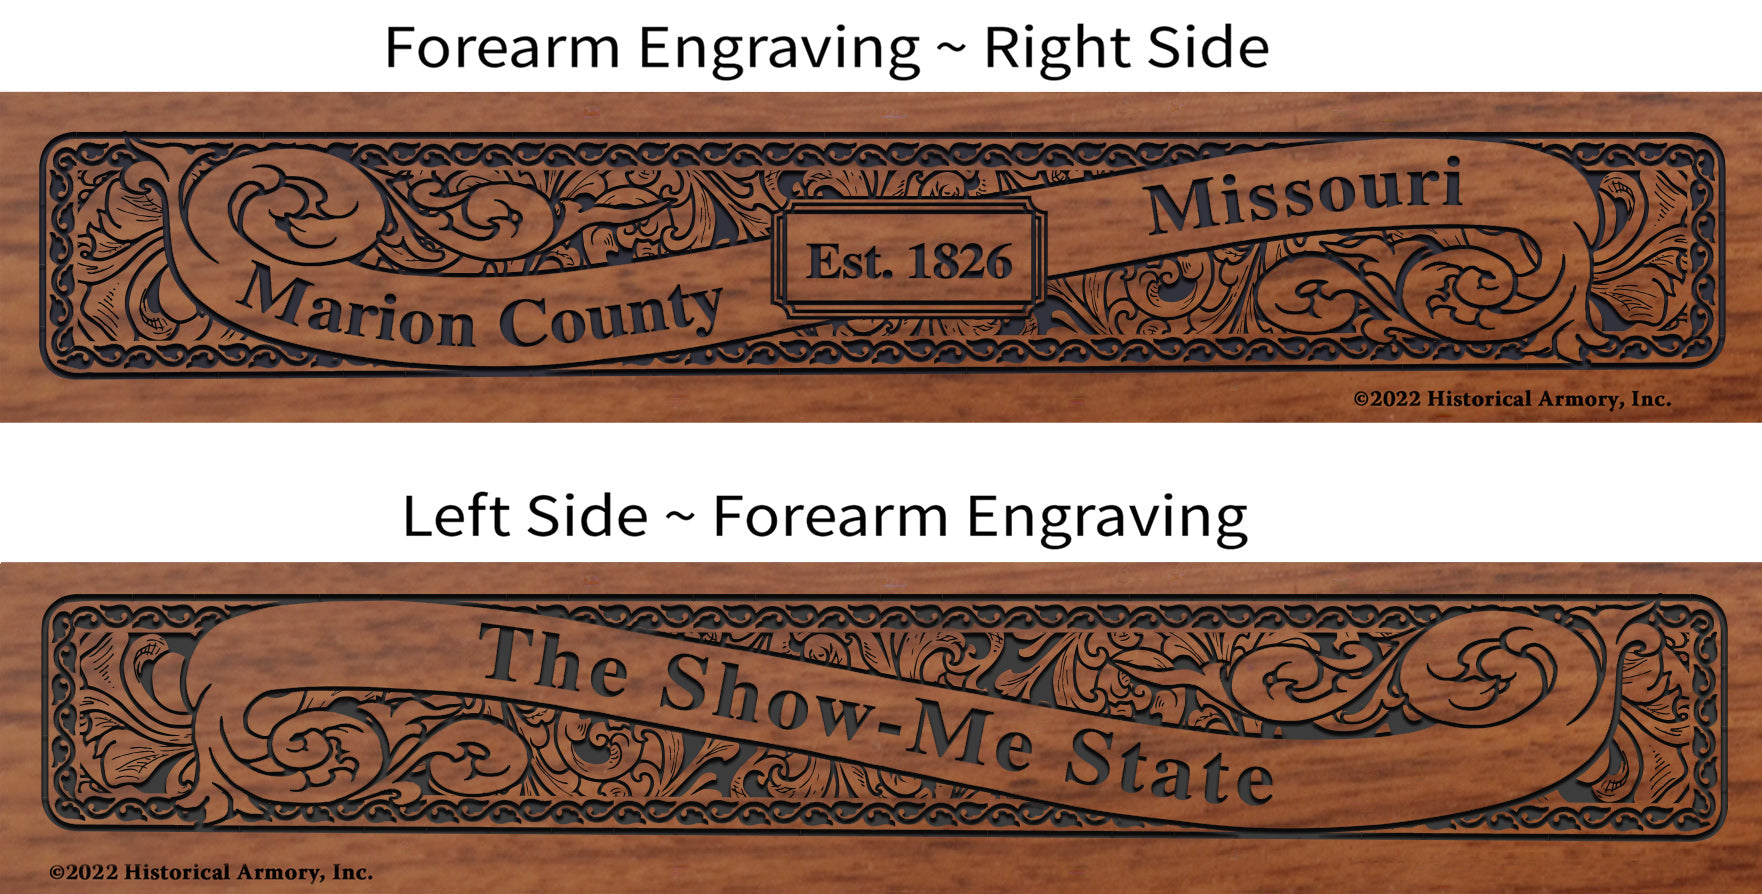 Marion County Missouri Engraved Rifle Forearm